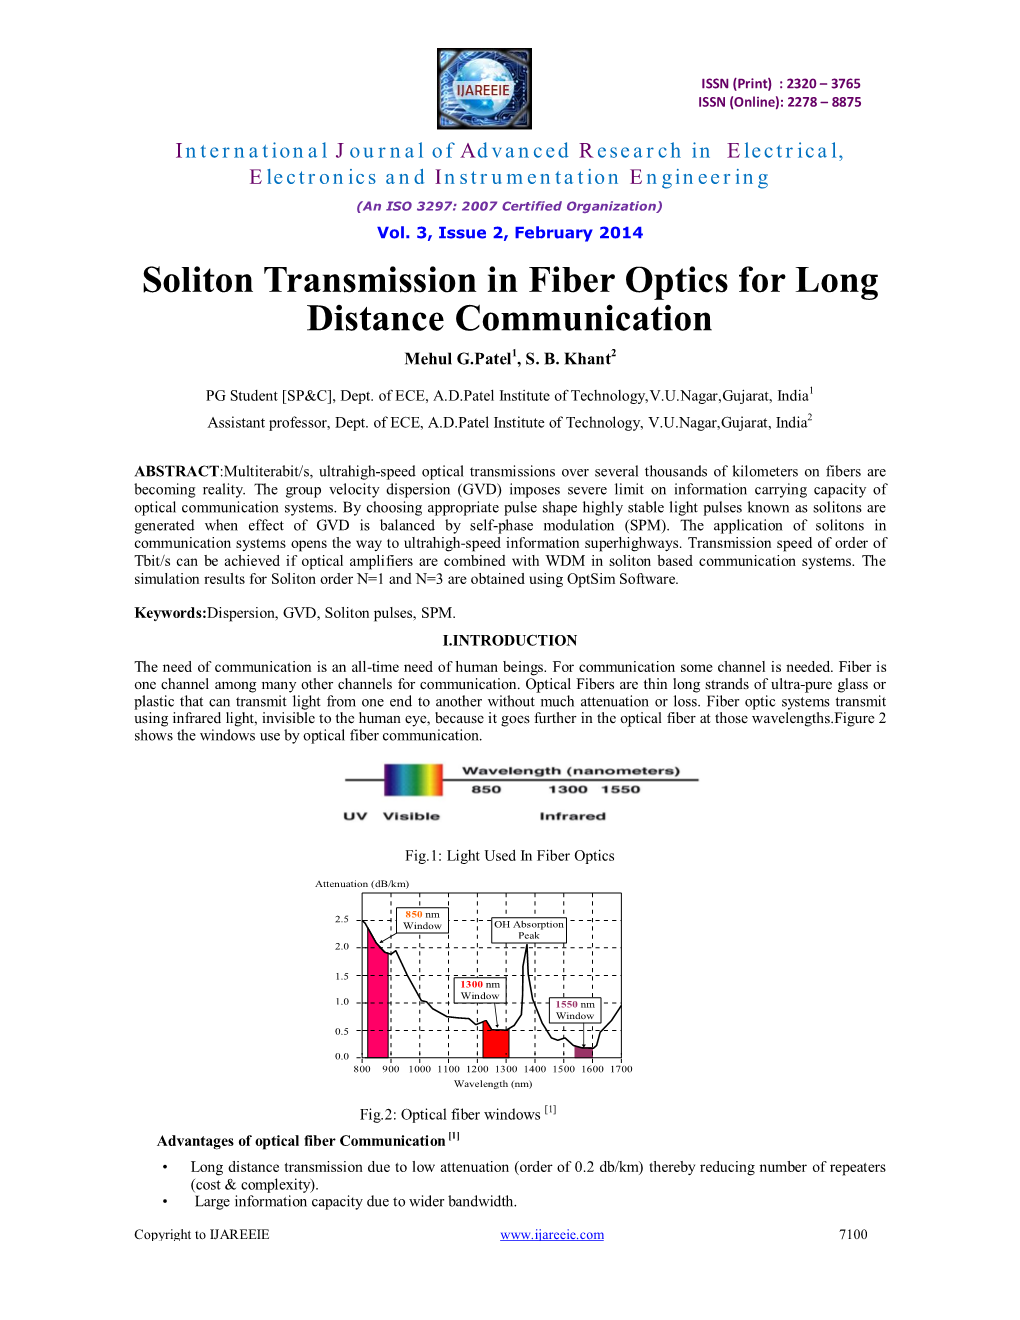 Soliton Transmission in Fiber Optics for Long Distance Communication Mehul G.Patel1, S